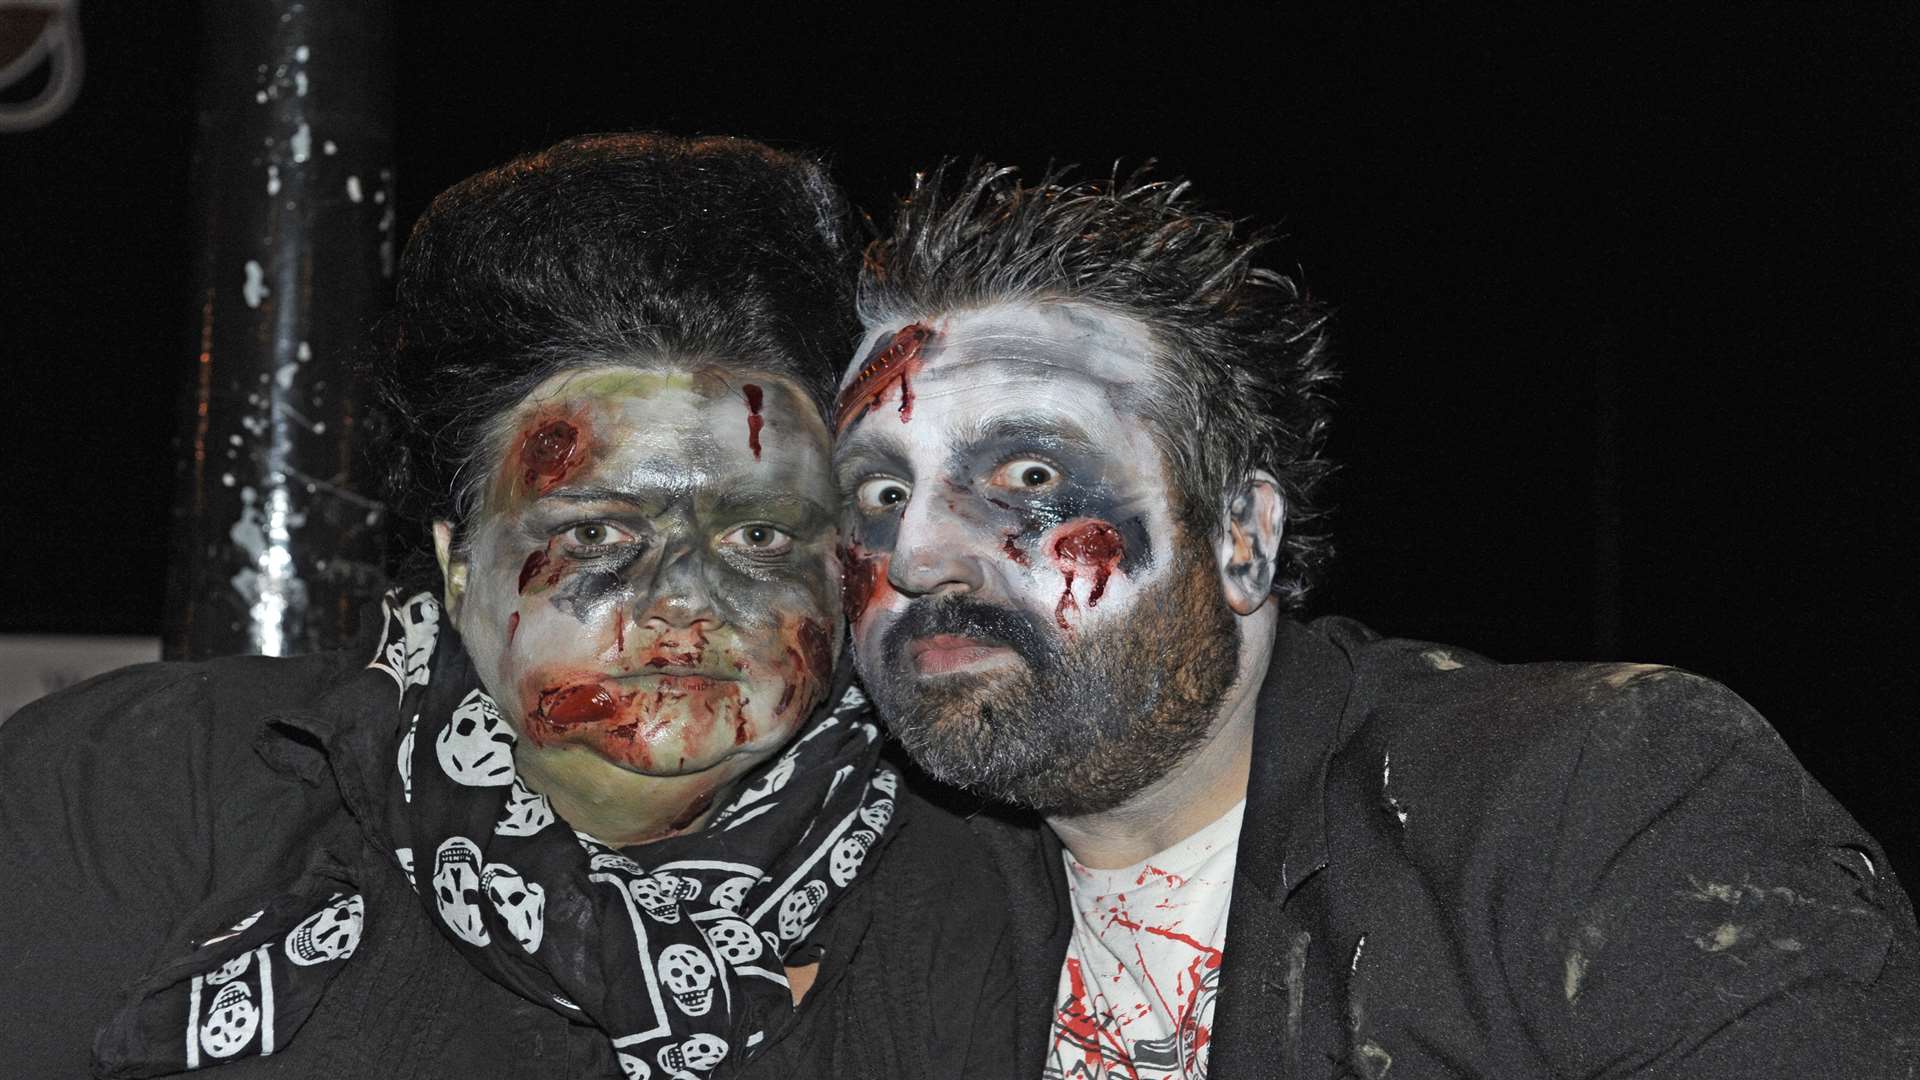 Nicola King and Martin Stone at the Zombie Crawl